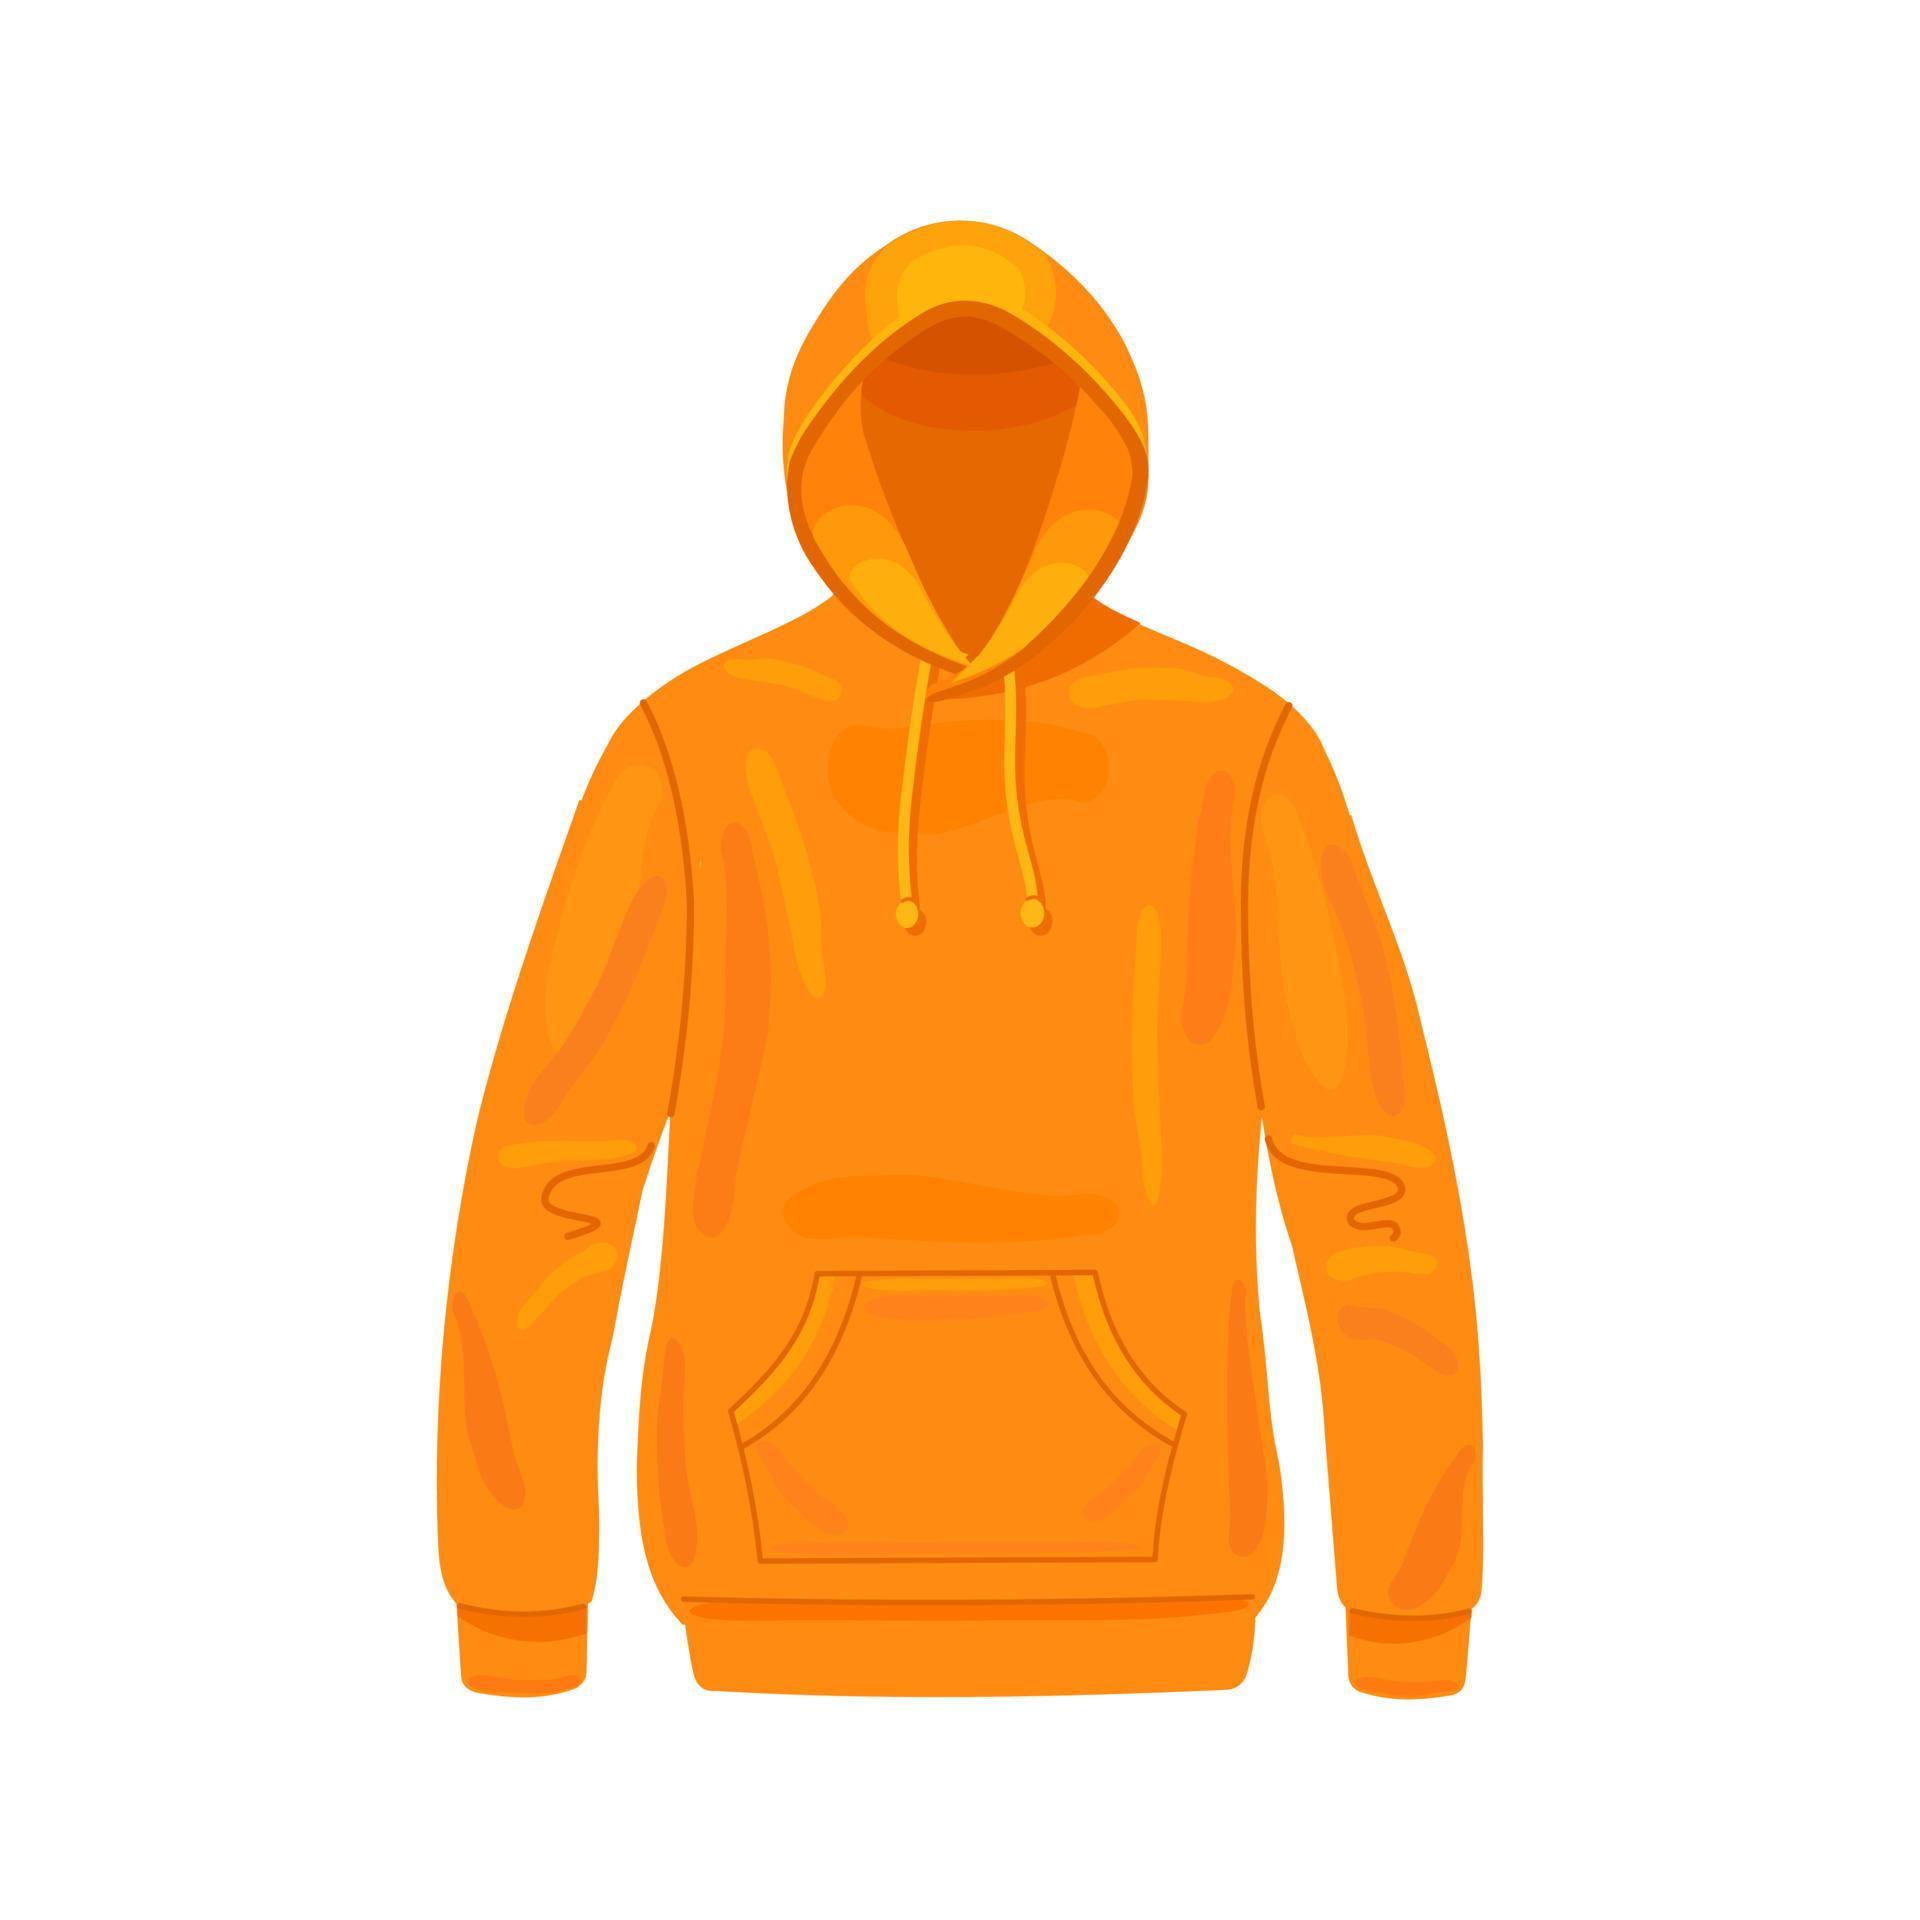 Hooded sweatshirt, orange. Front view. Vector illustration isolated on ...